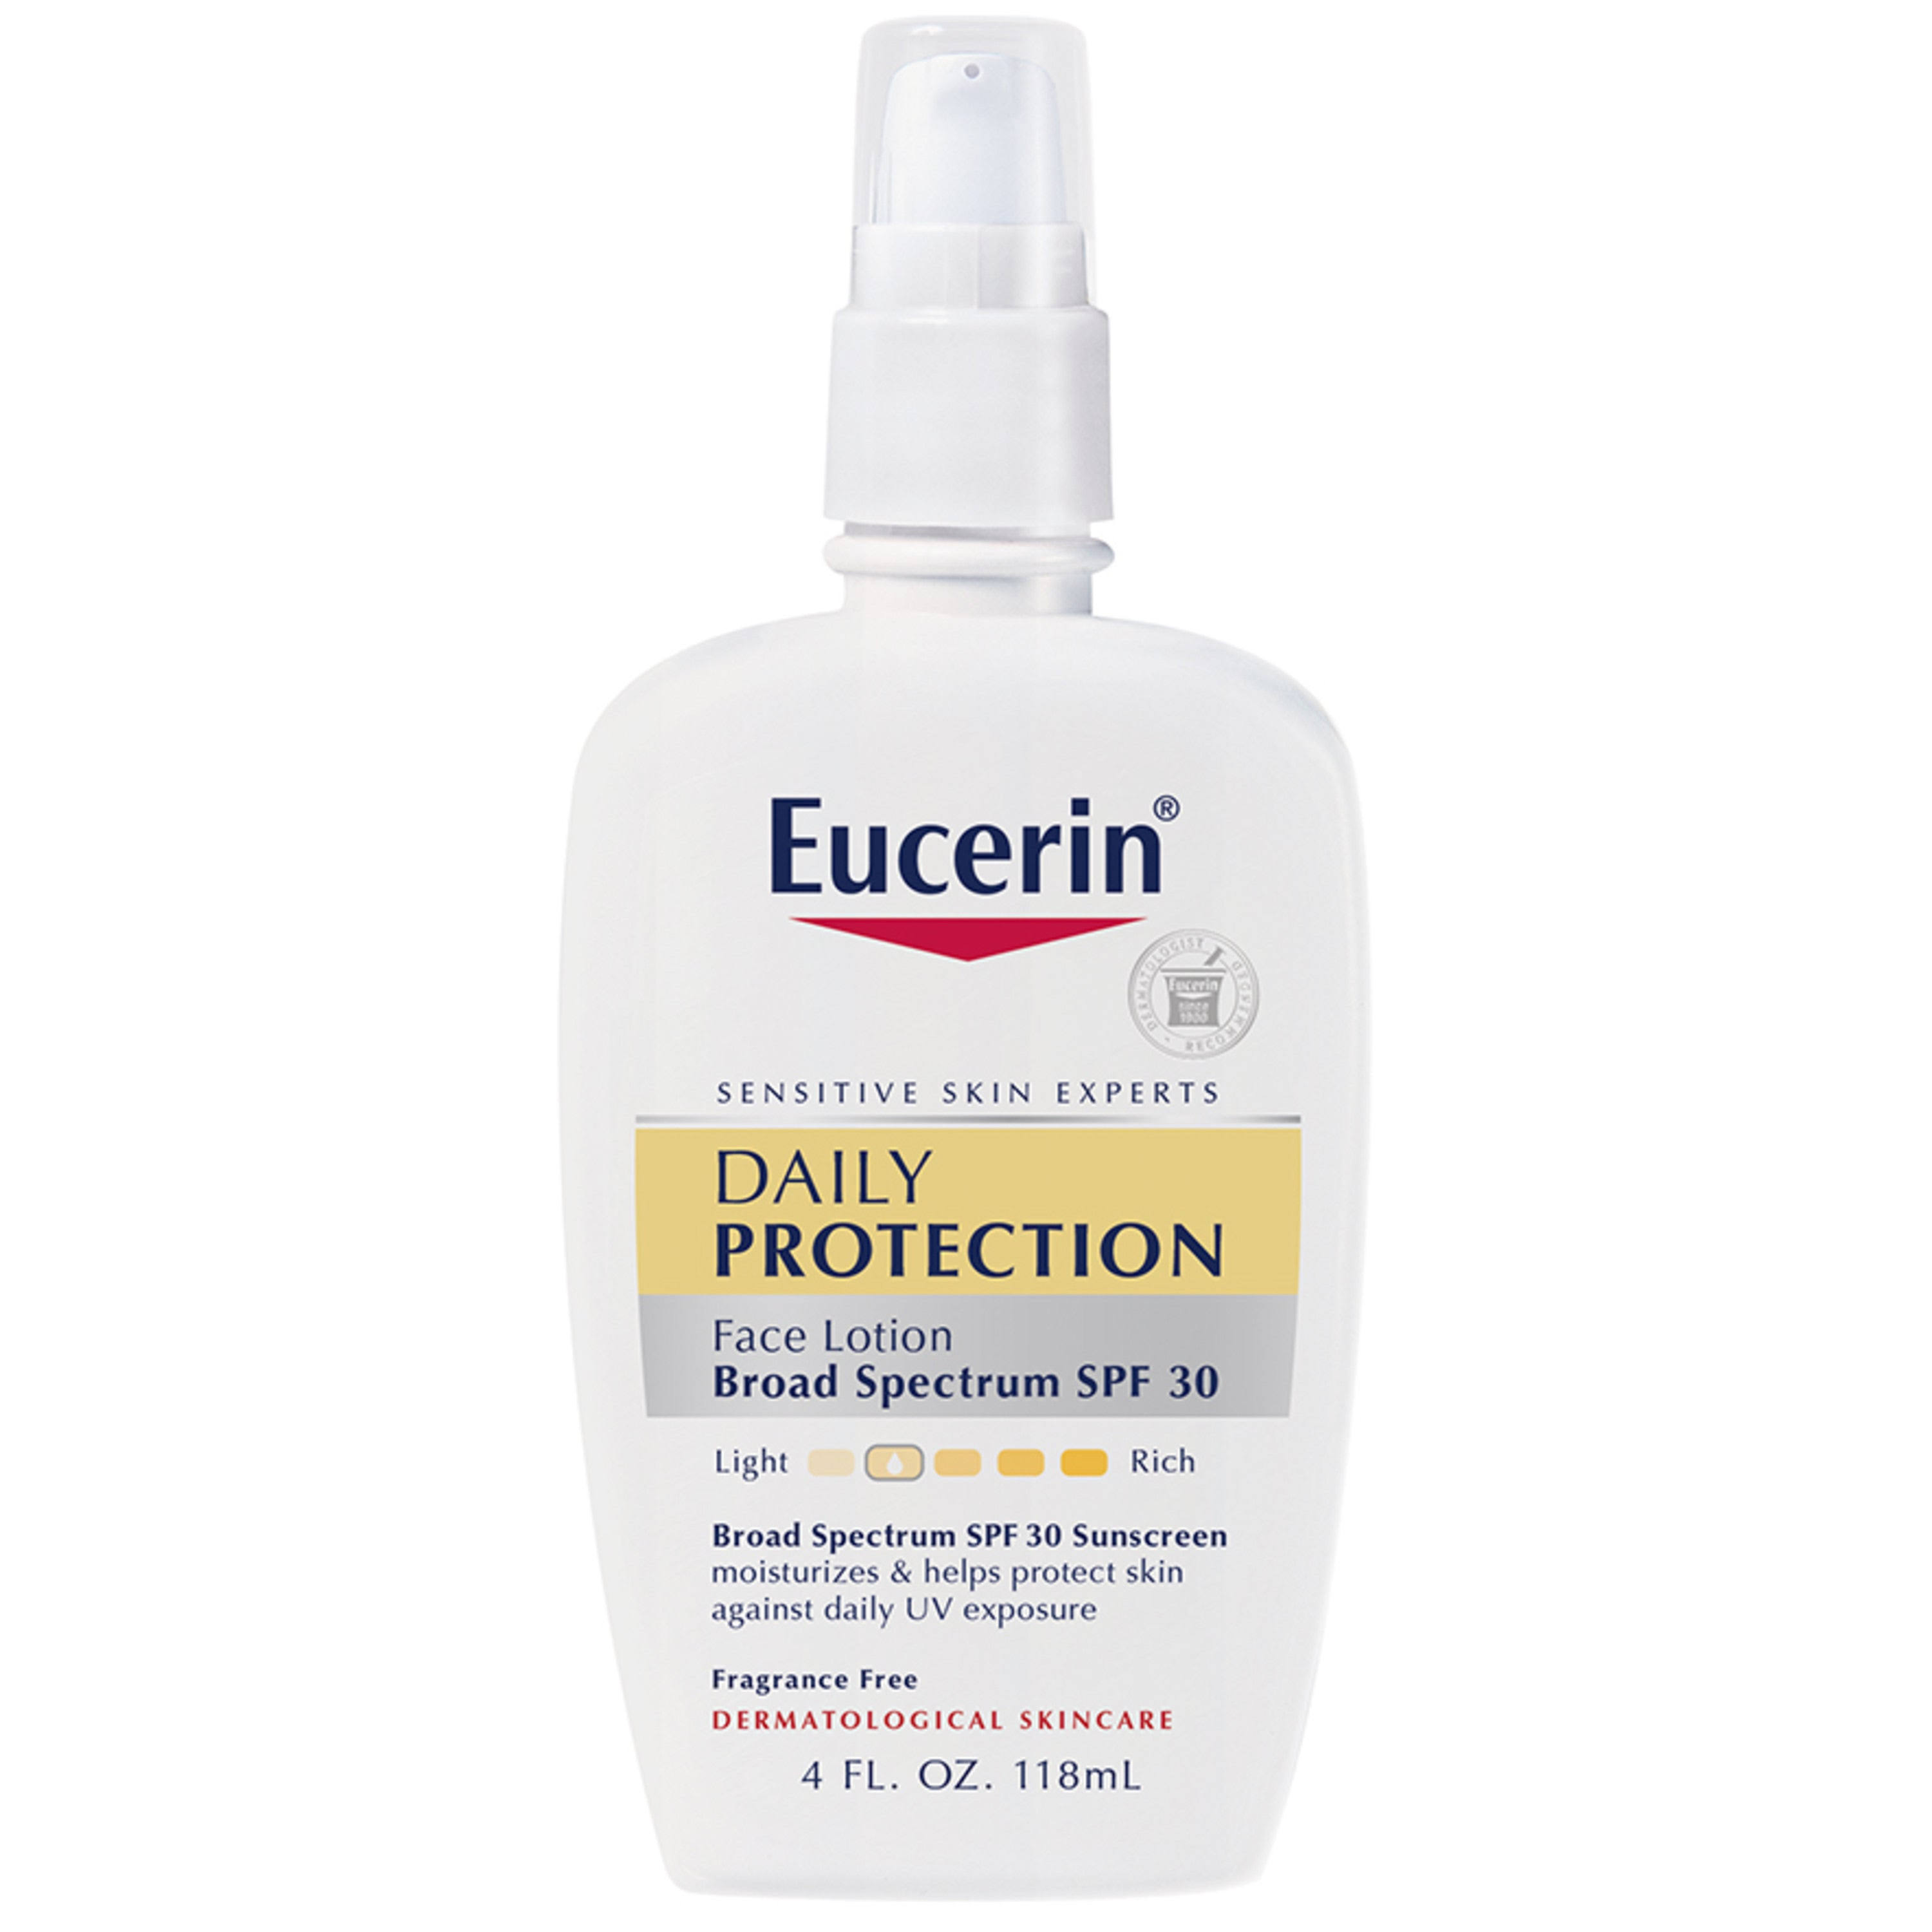 Eucerin Daily Protection Light Broad Spectrum Sunscreen Moisturizing Face Lotion - SPF 30, 4 fl oz